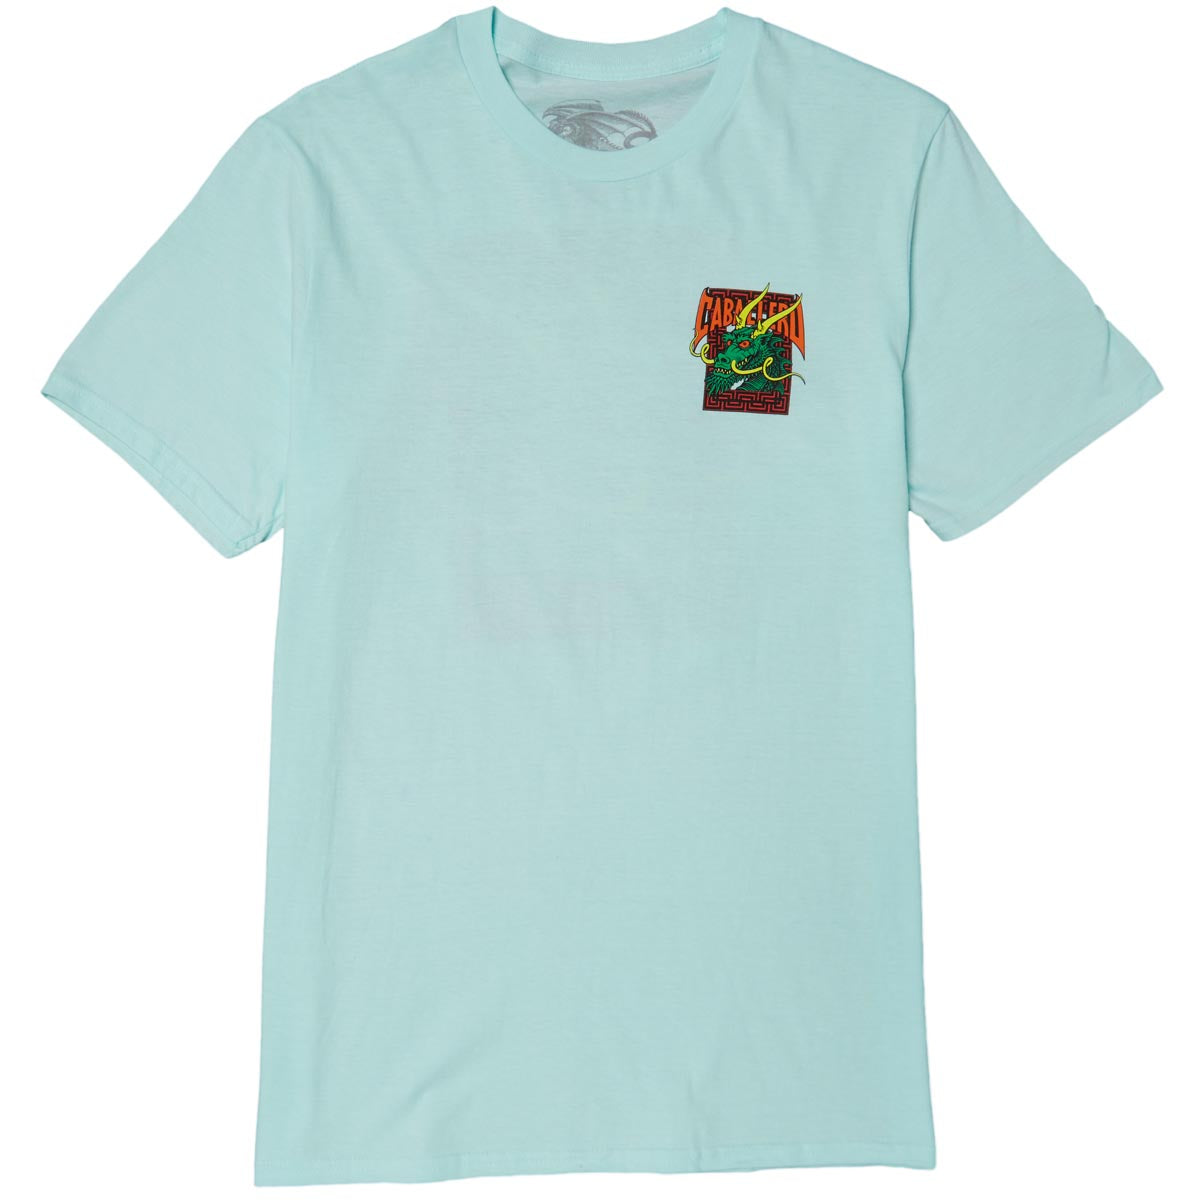 Powell-Peralta Steve Caballero Street Dragon T-Shirt - Teal Ice image 2